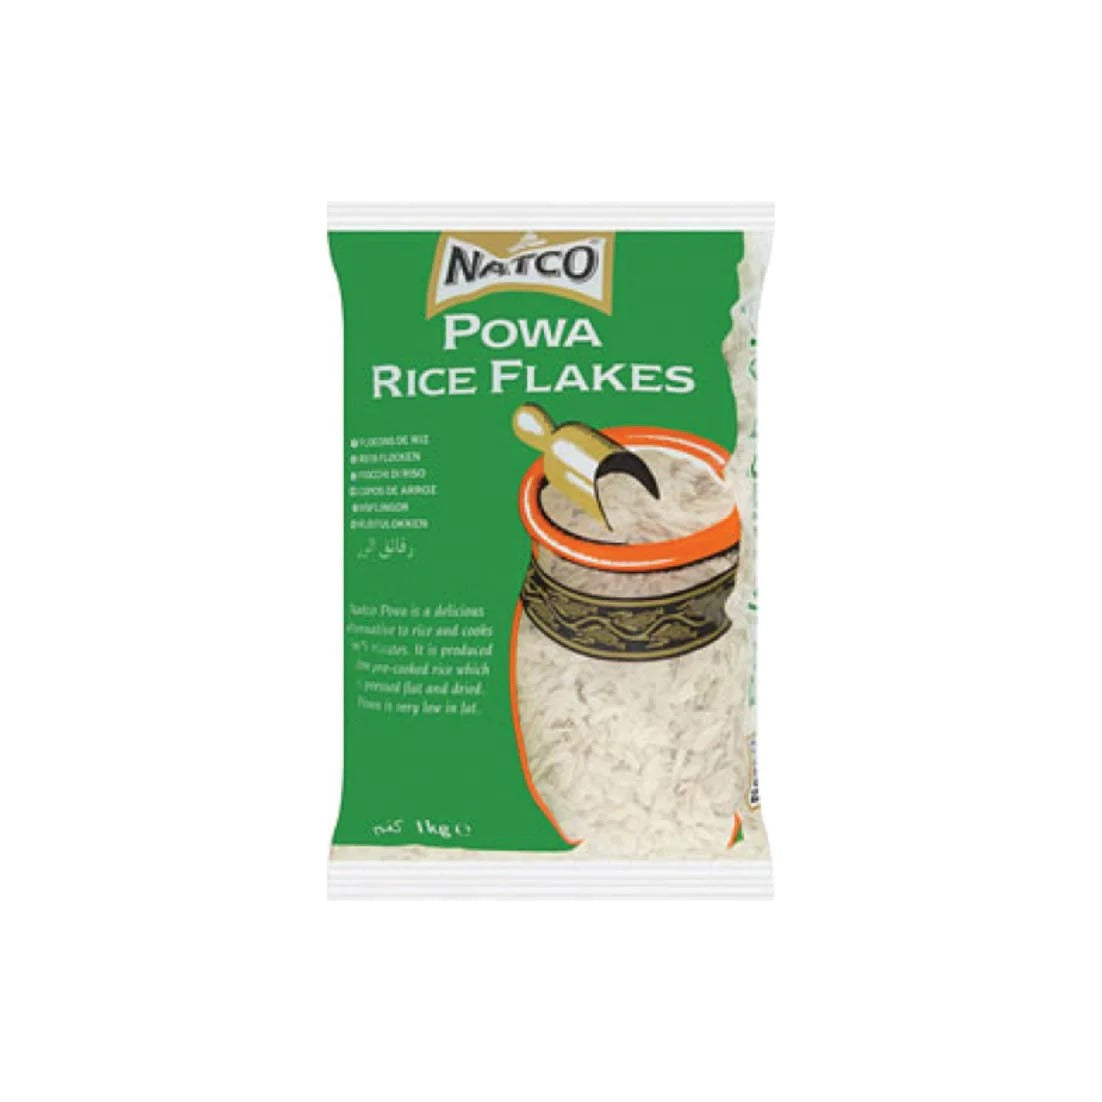 Natco Medium Poha (Rice Flakes) - 1 Kg